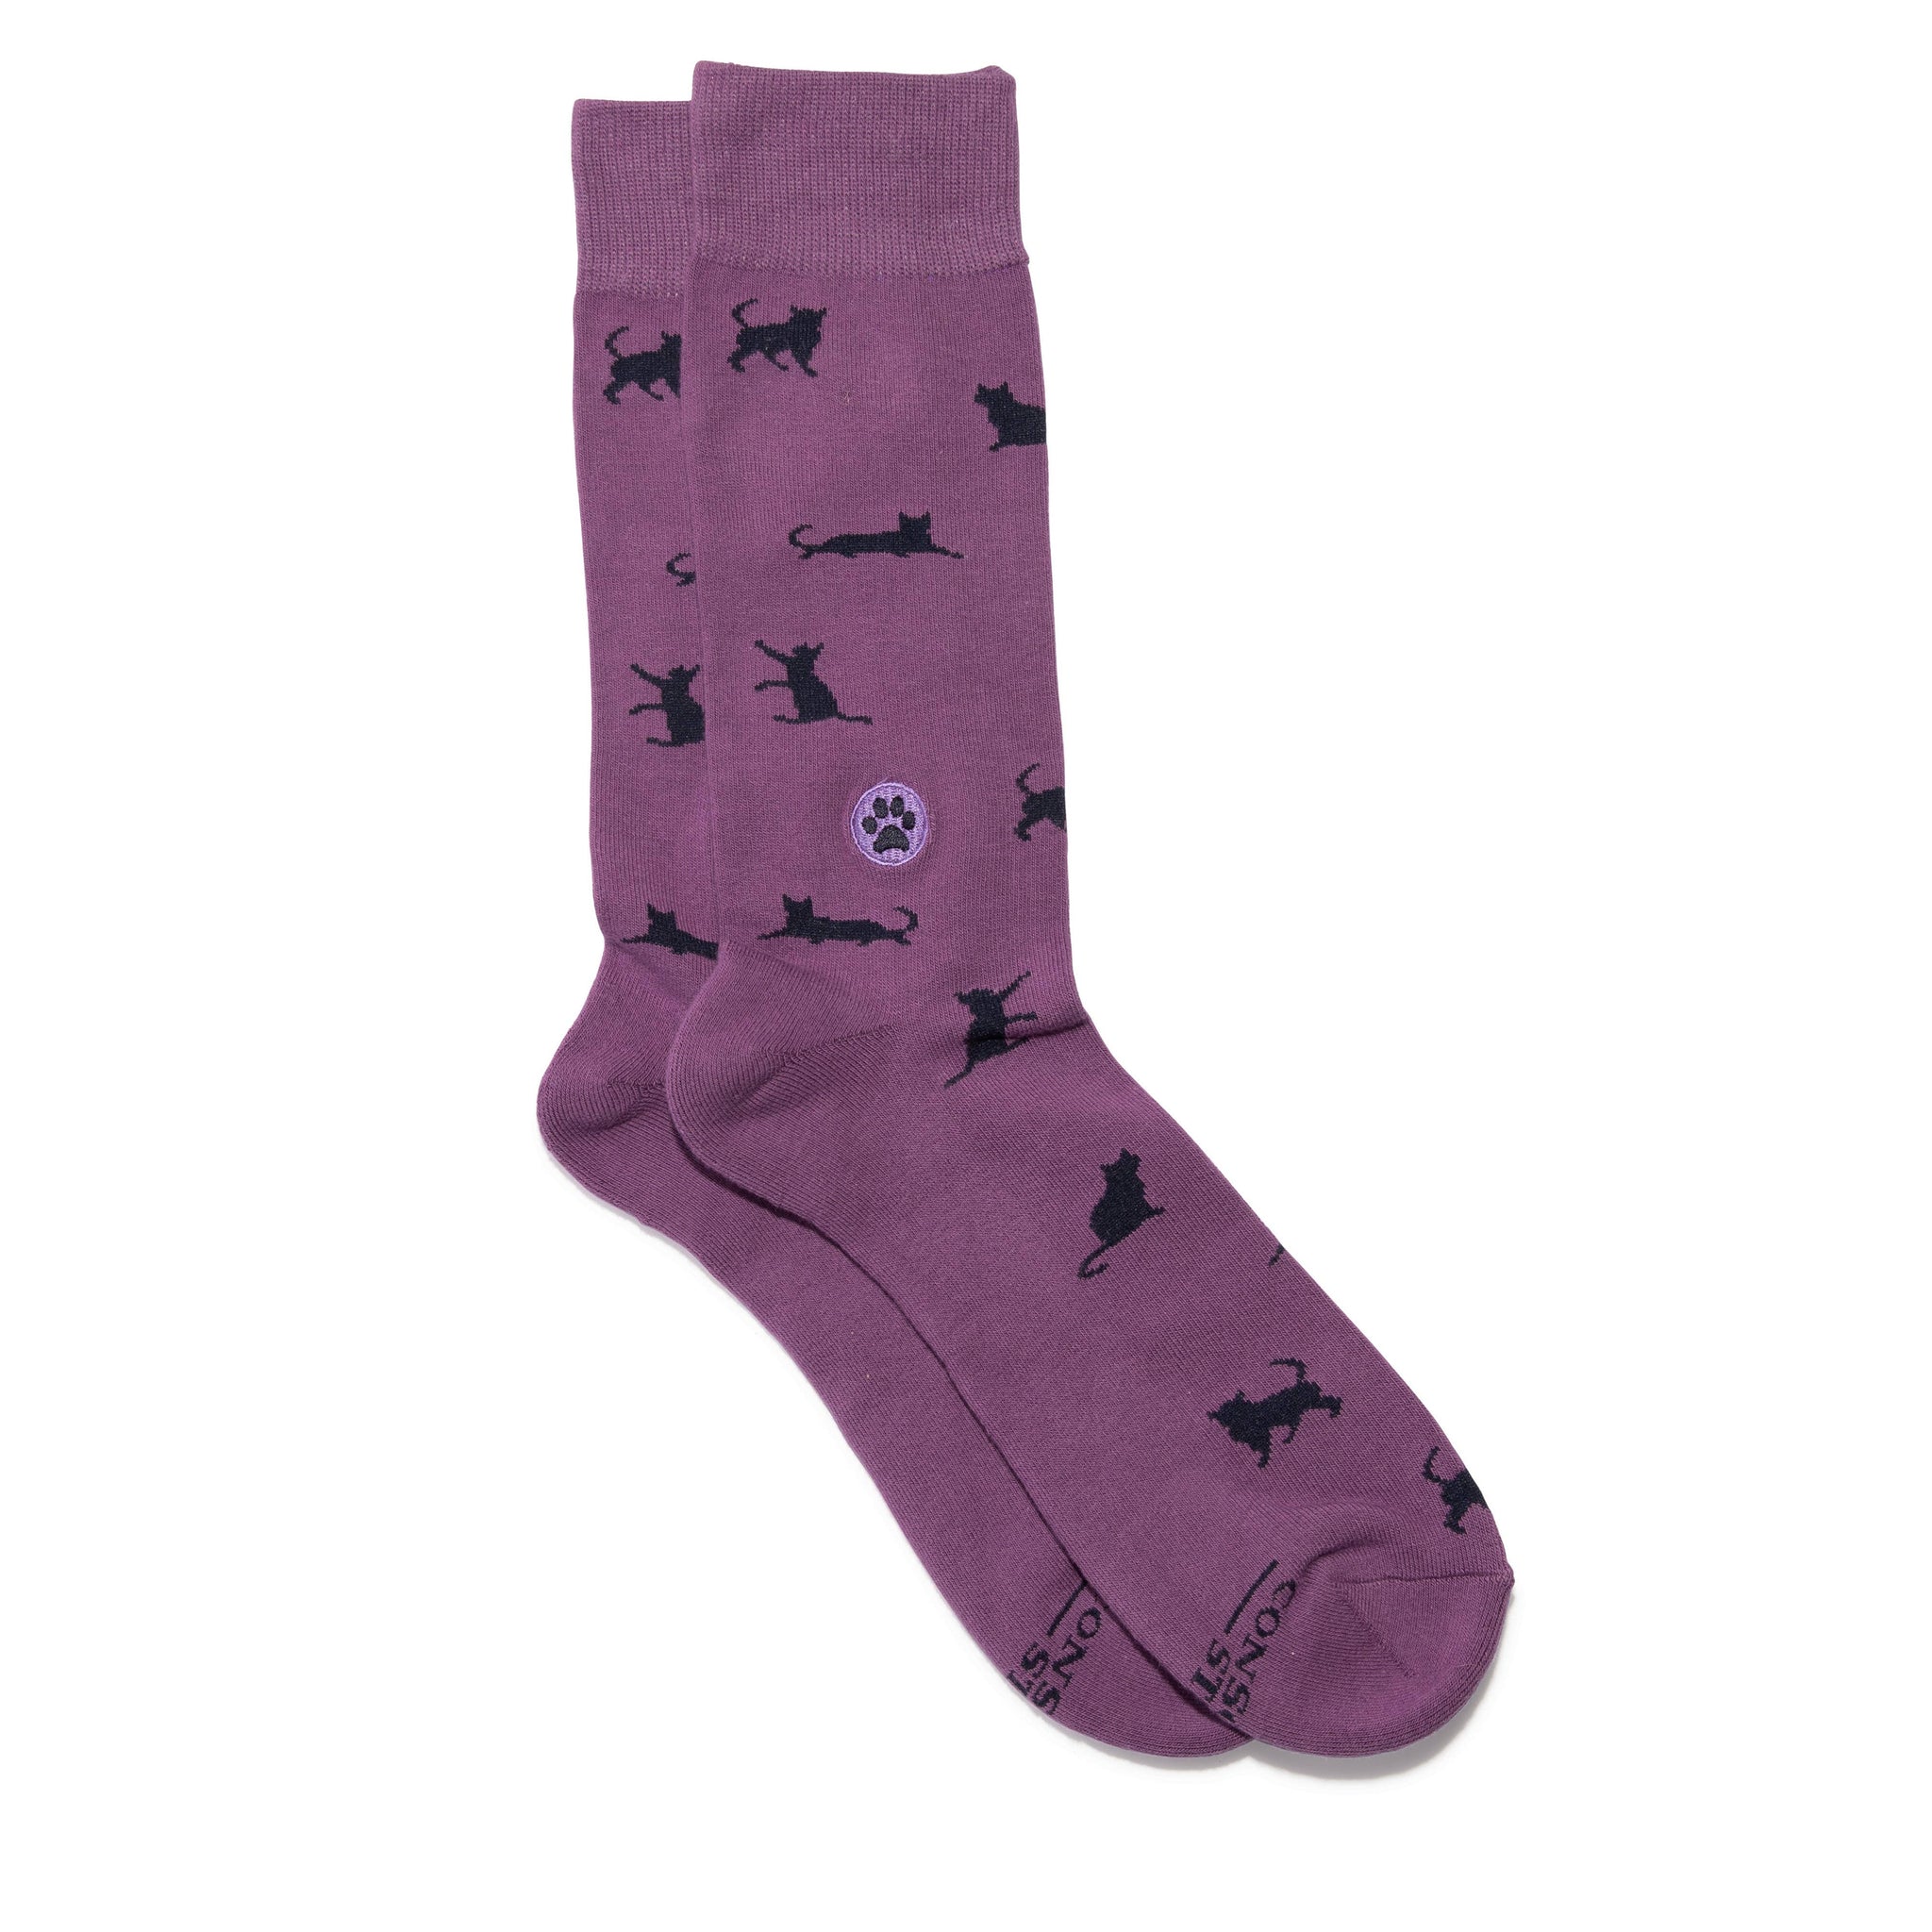 Socks that Save Cats - Women's Socks